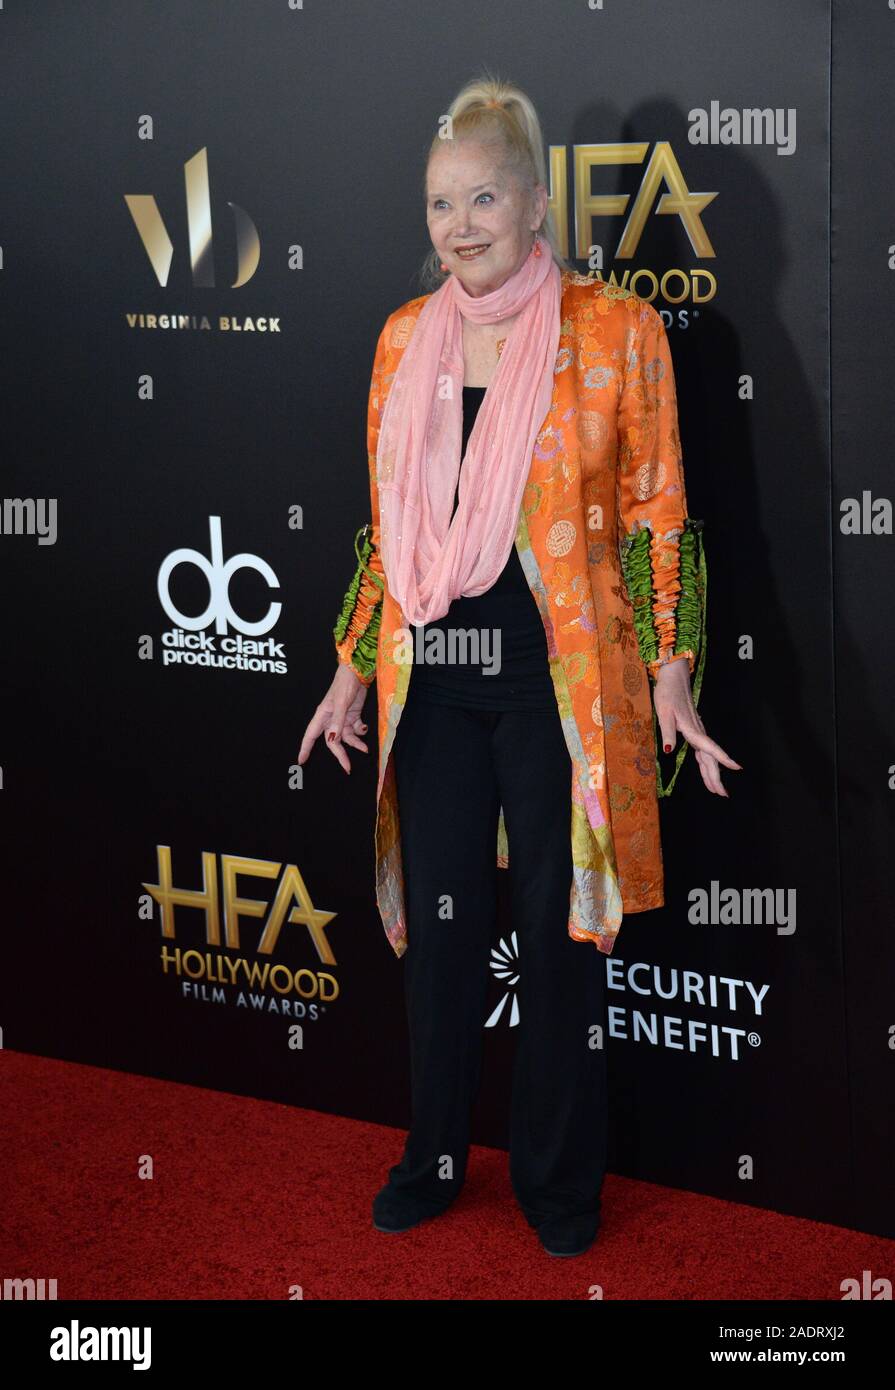 BEVERLY HILLS, CA. 6 Novembre 2016: attrice Sally Kirkland al 2016 Hollywood Film Awards presso il Beverly Hilton Hotel. © 2016 Paul Smith / Featureflash Foto Stock